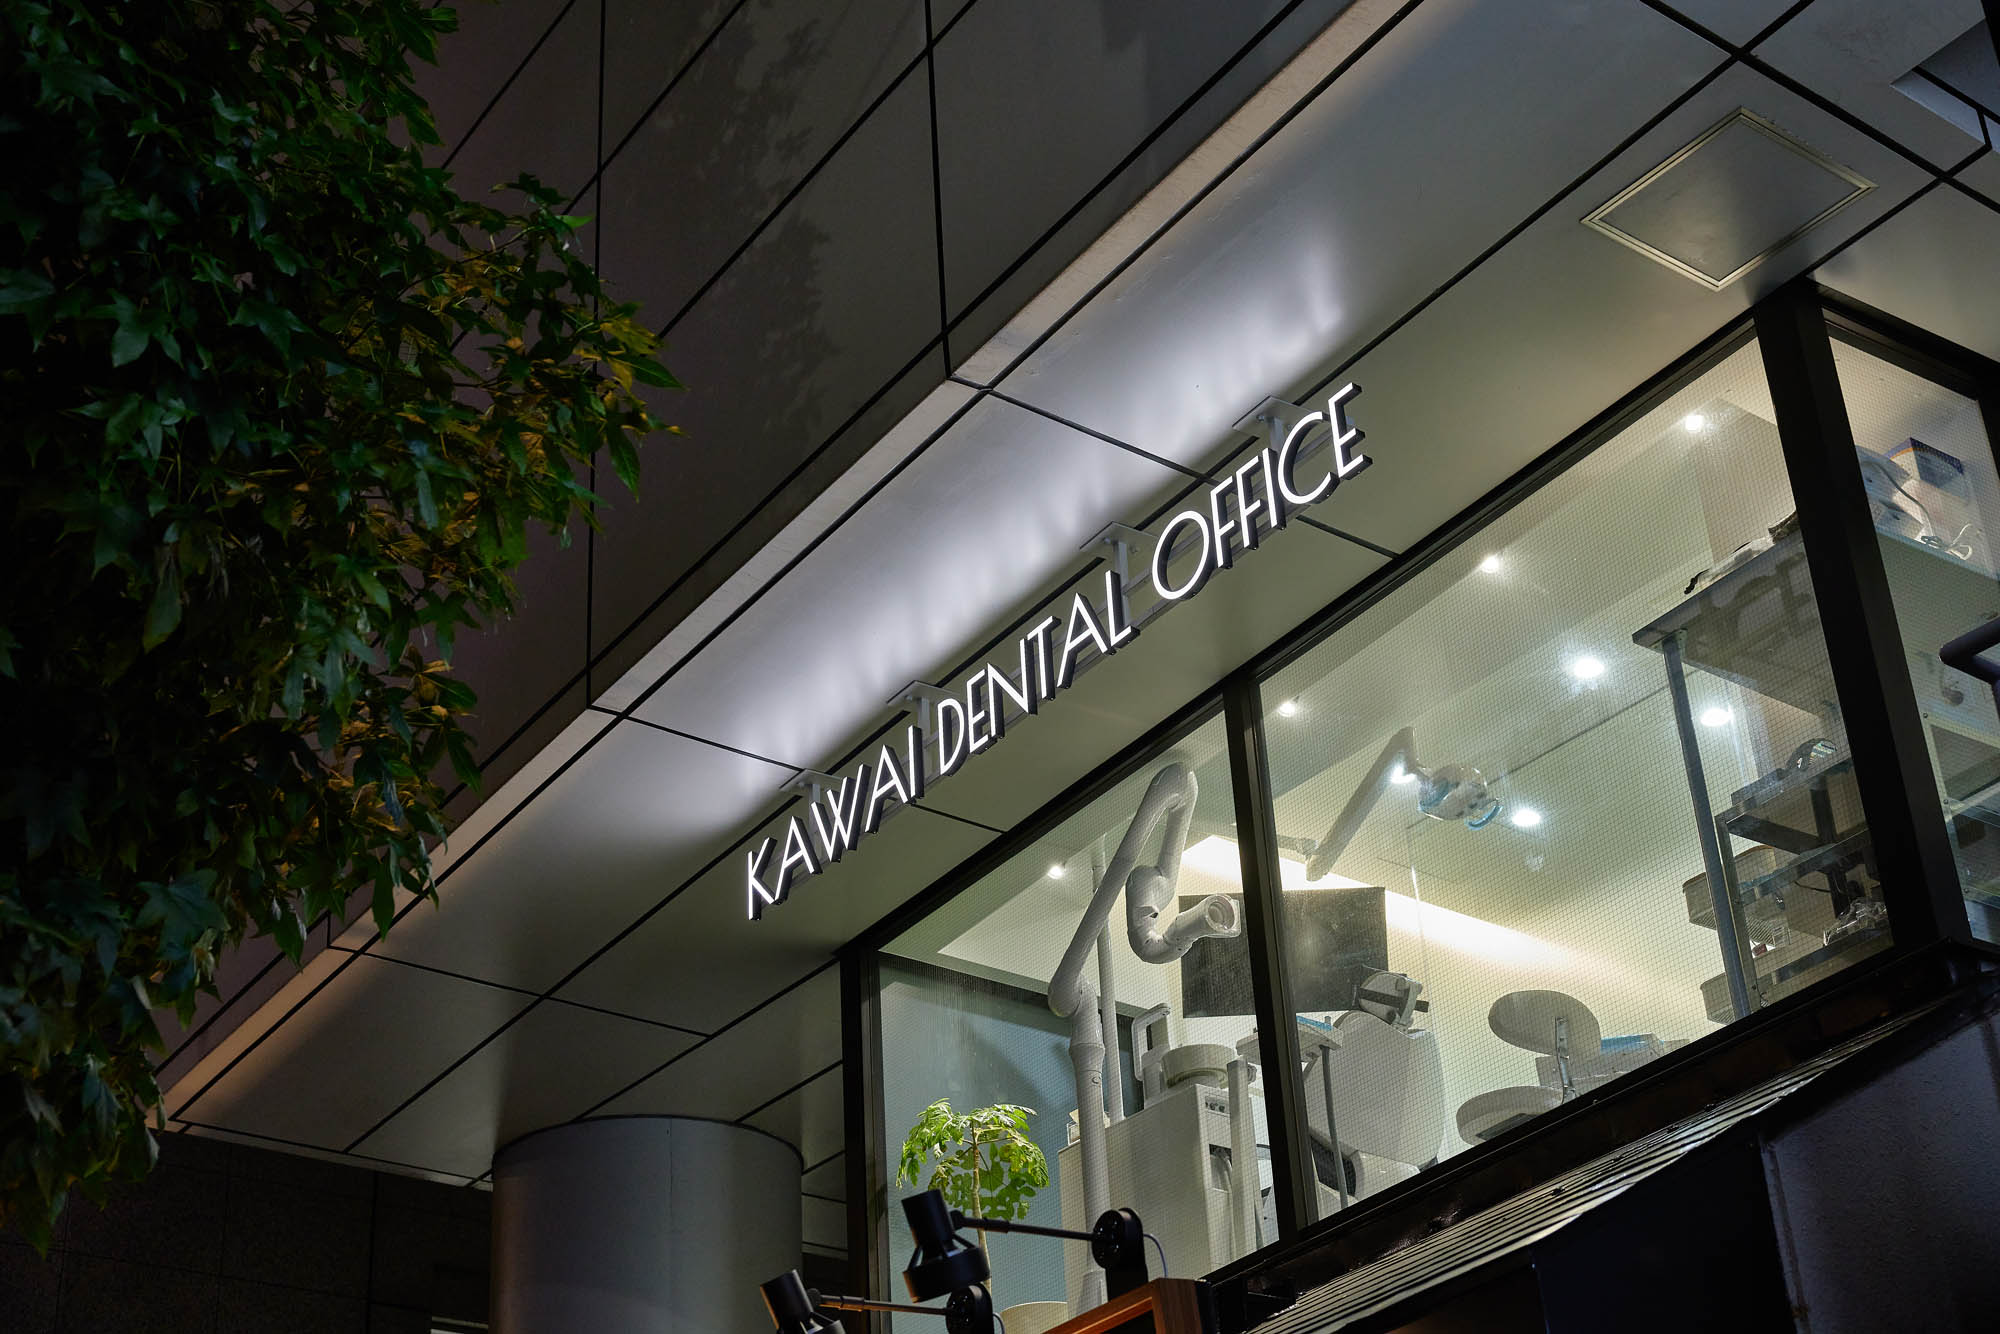 KAWAI DENTAL OFFICEの実績写真